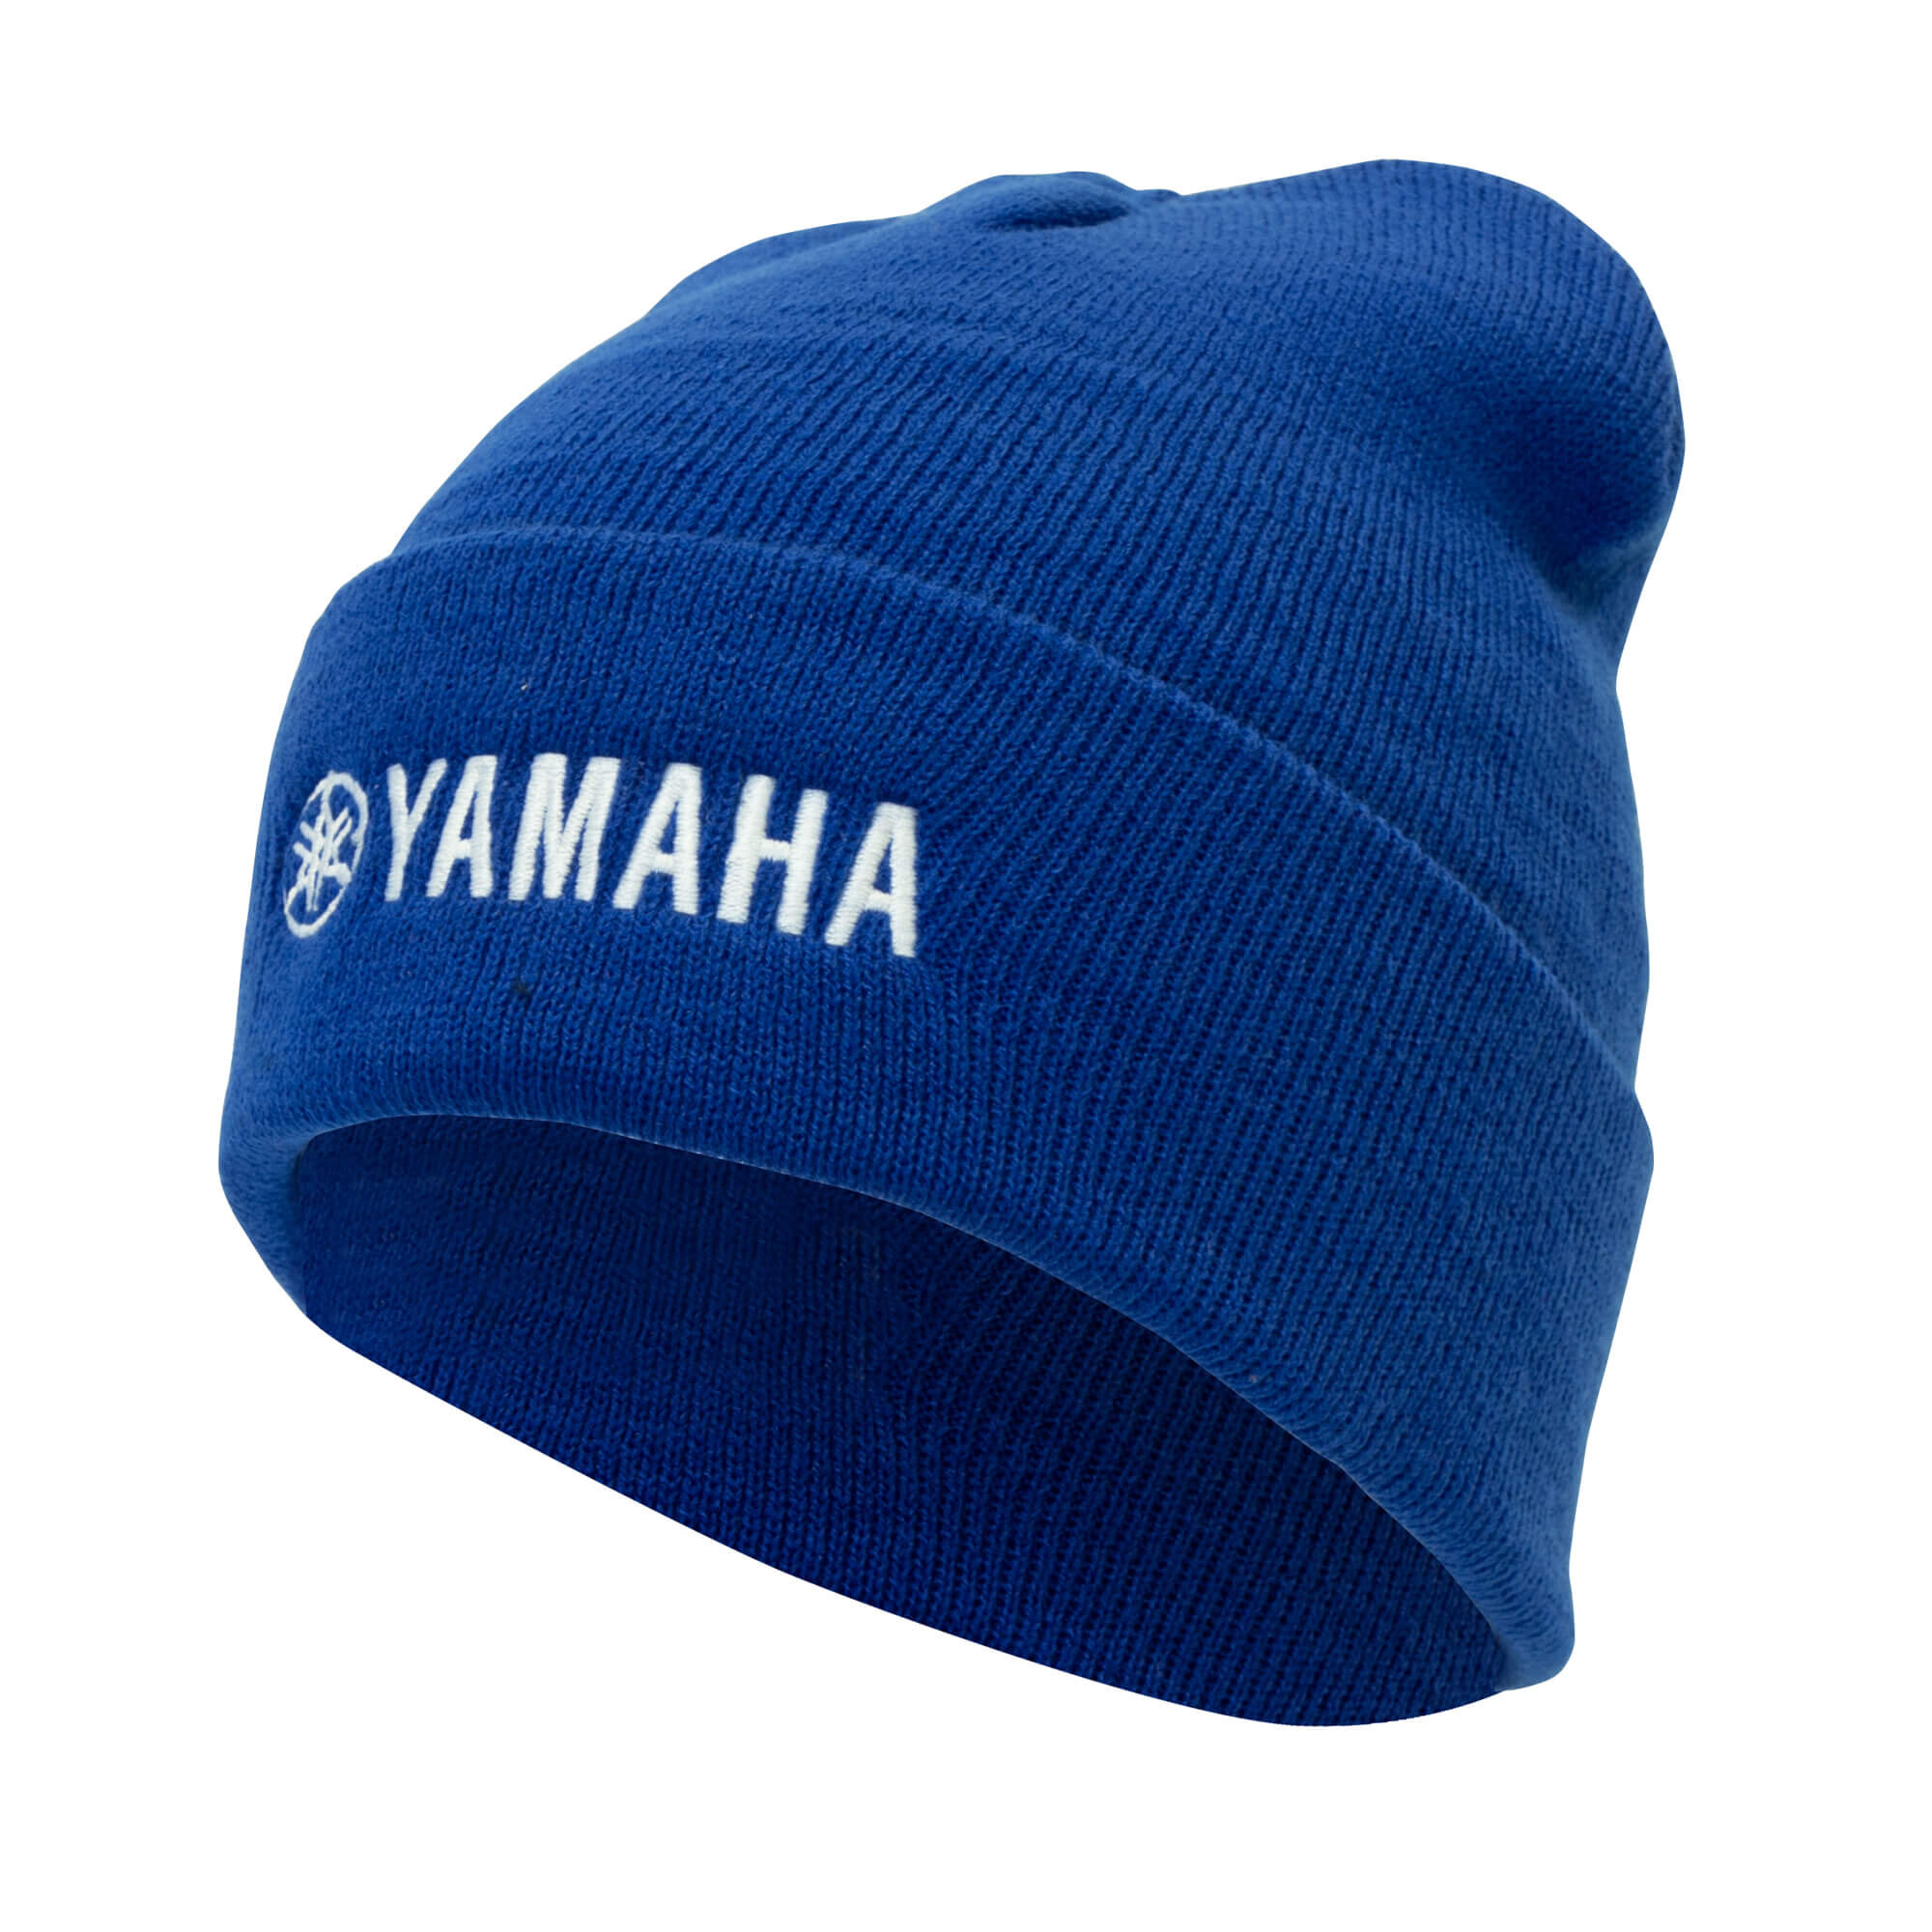 Yamaha Roll Up Beanie One size blue